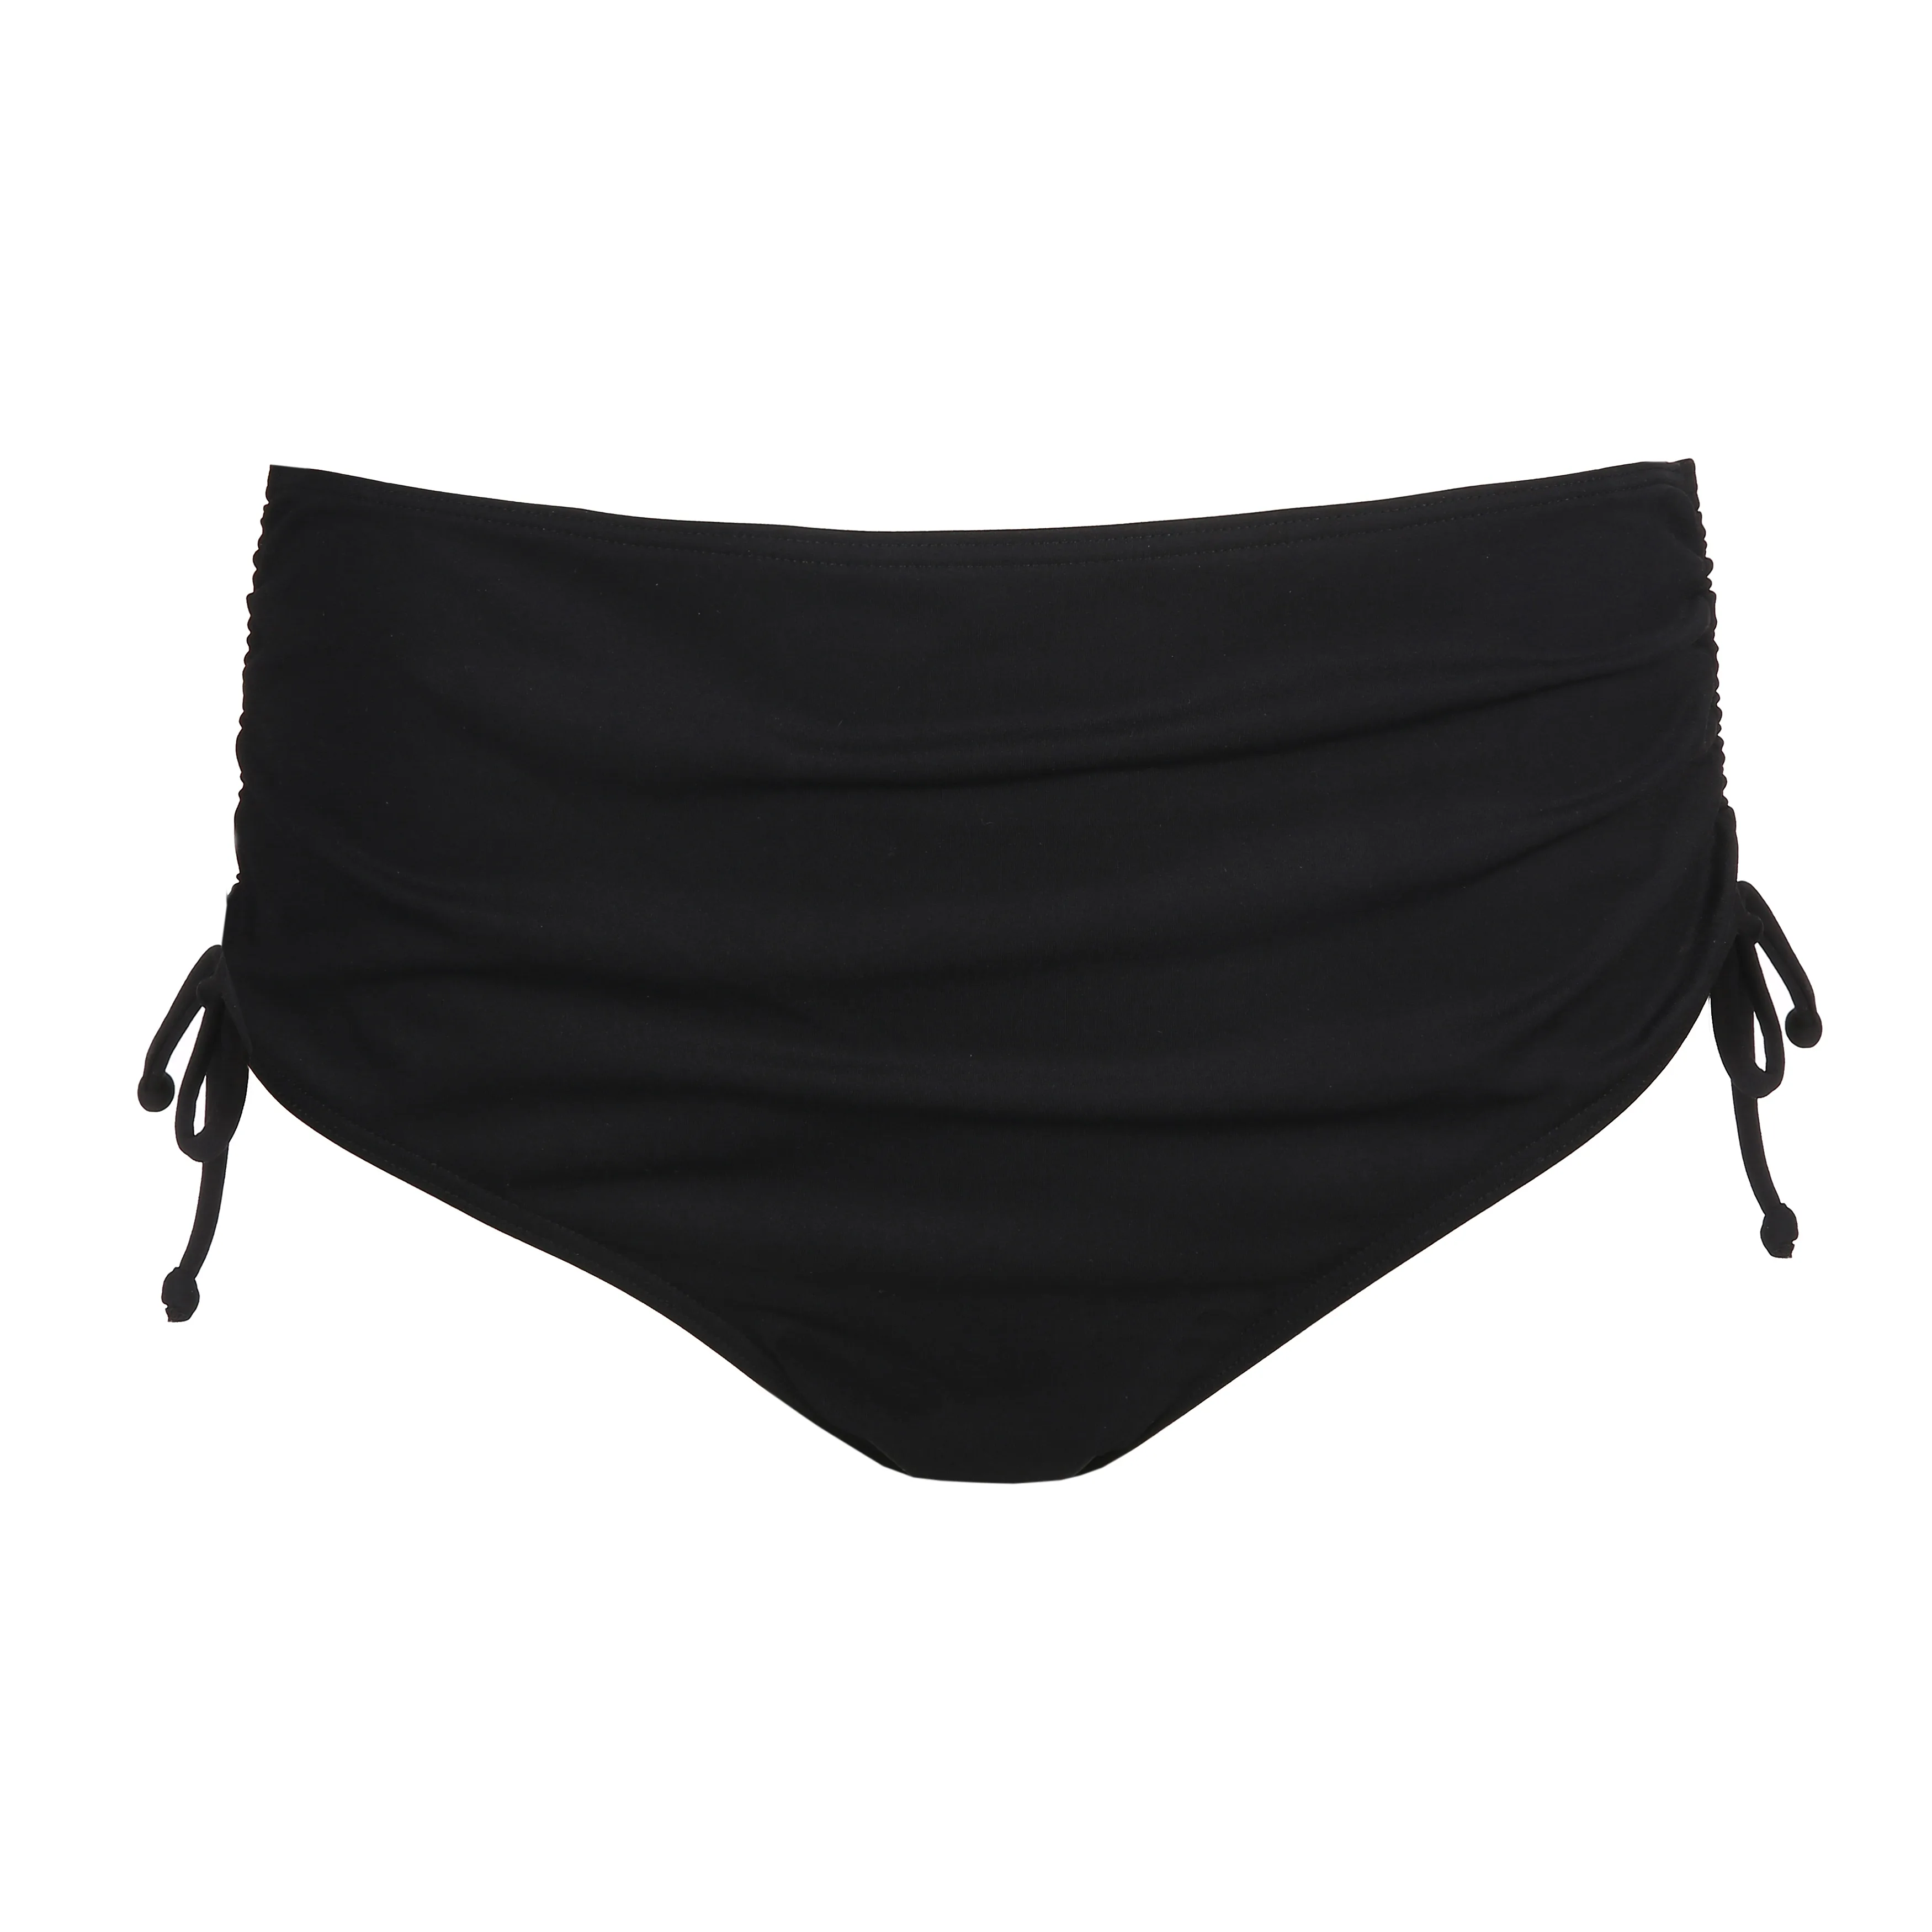 PrimaDonna Swim HOLIDAY Black swimsuit removable pads